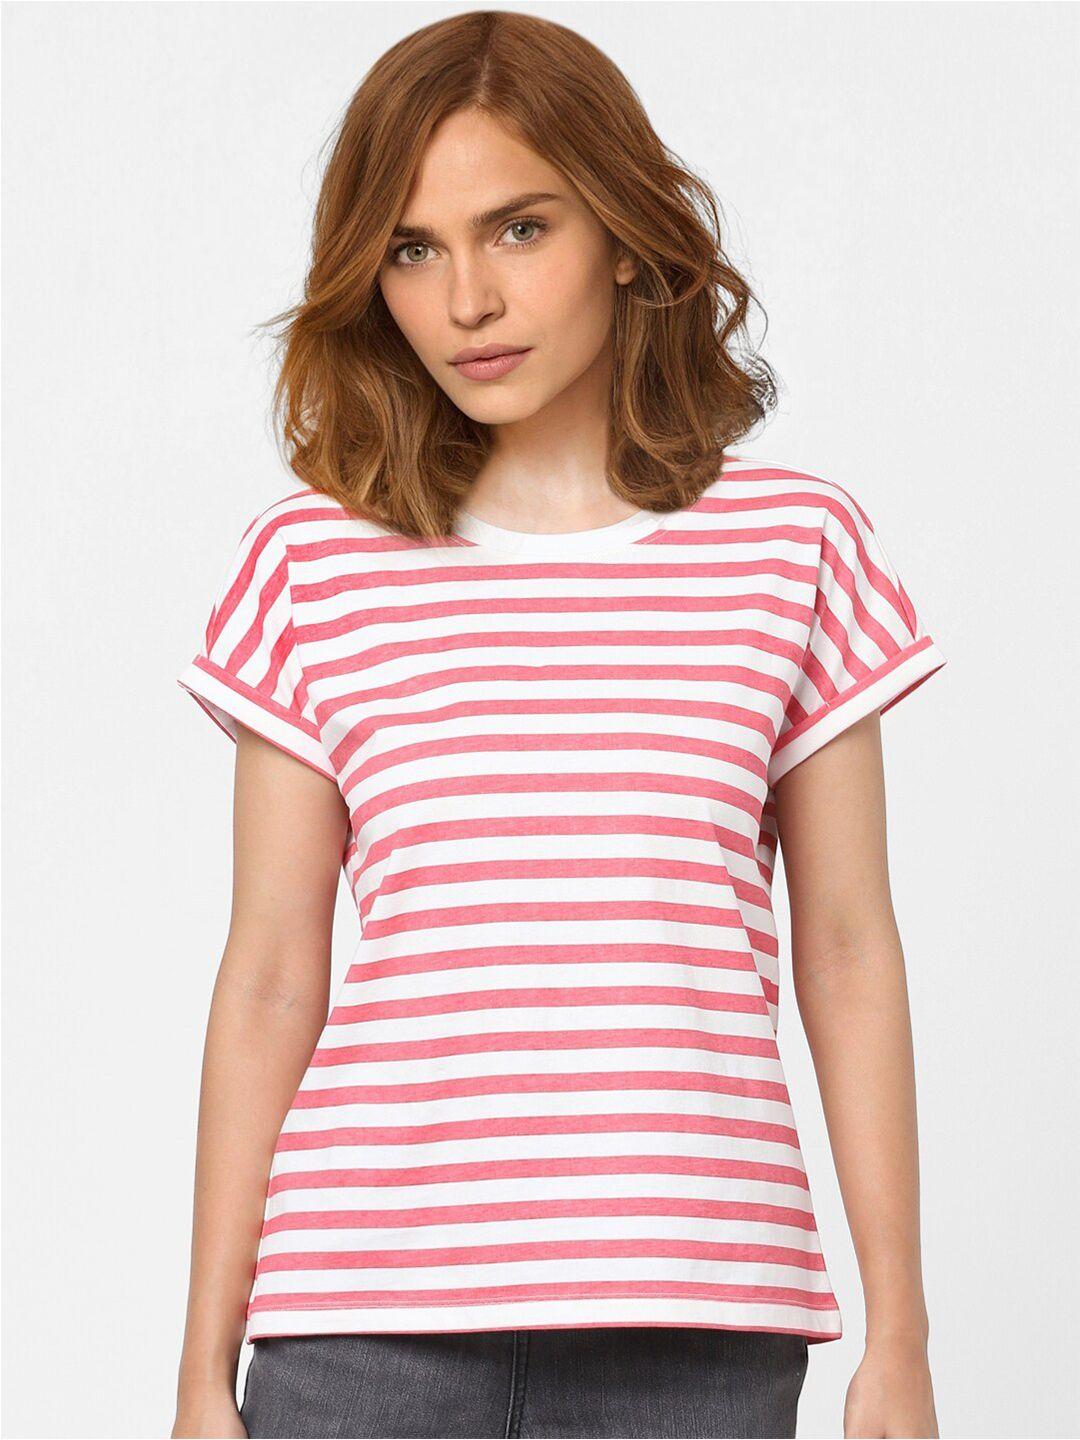 vero moda women pink & white striped extended sleeves t-shirt